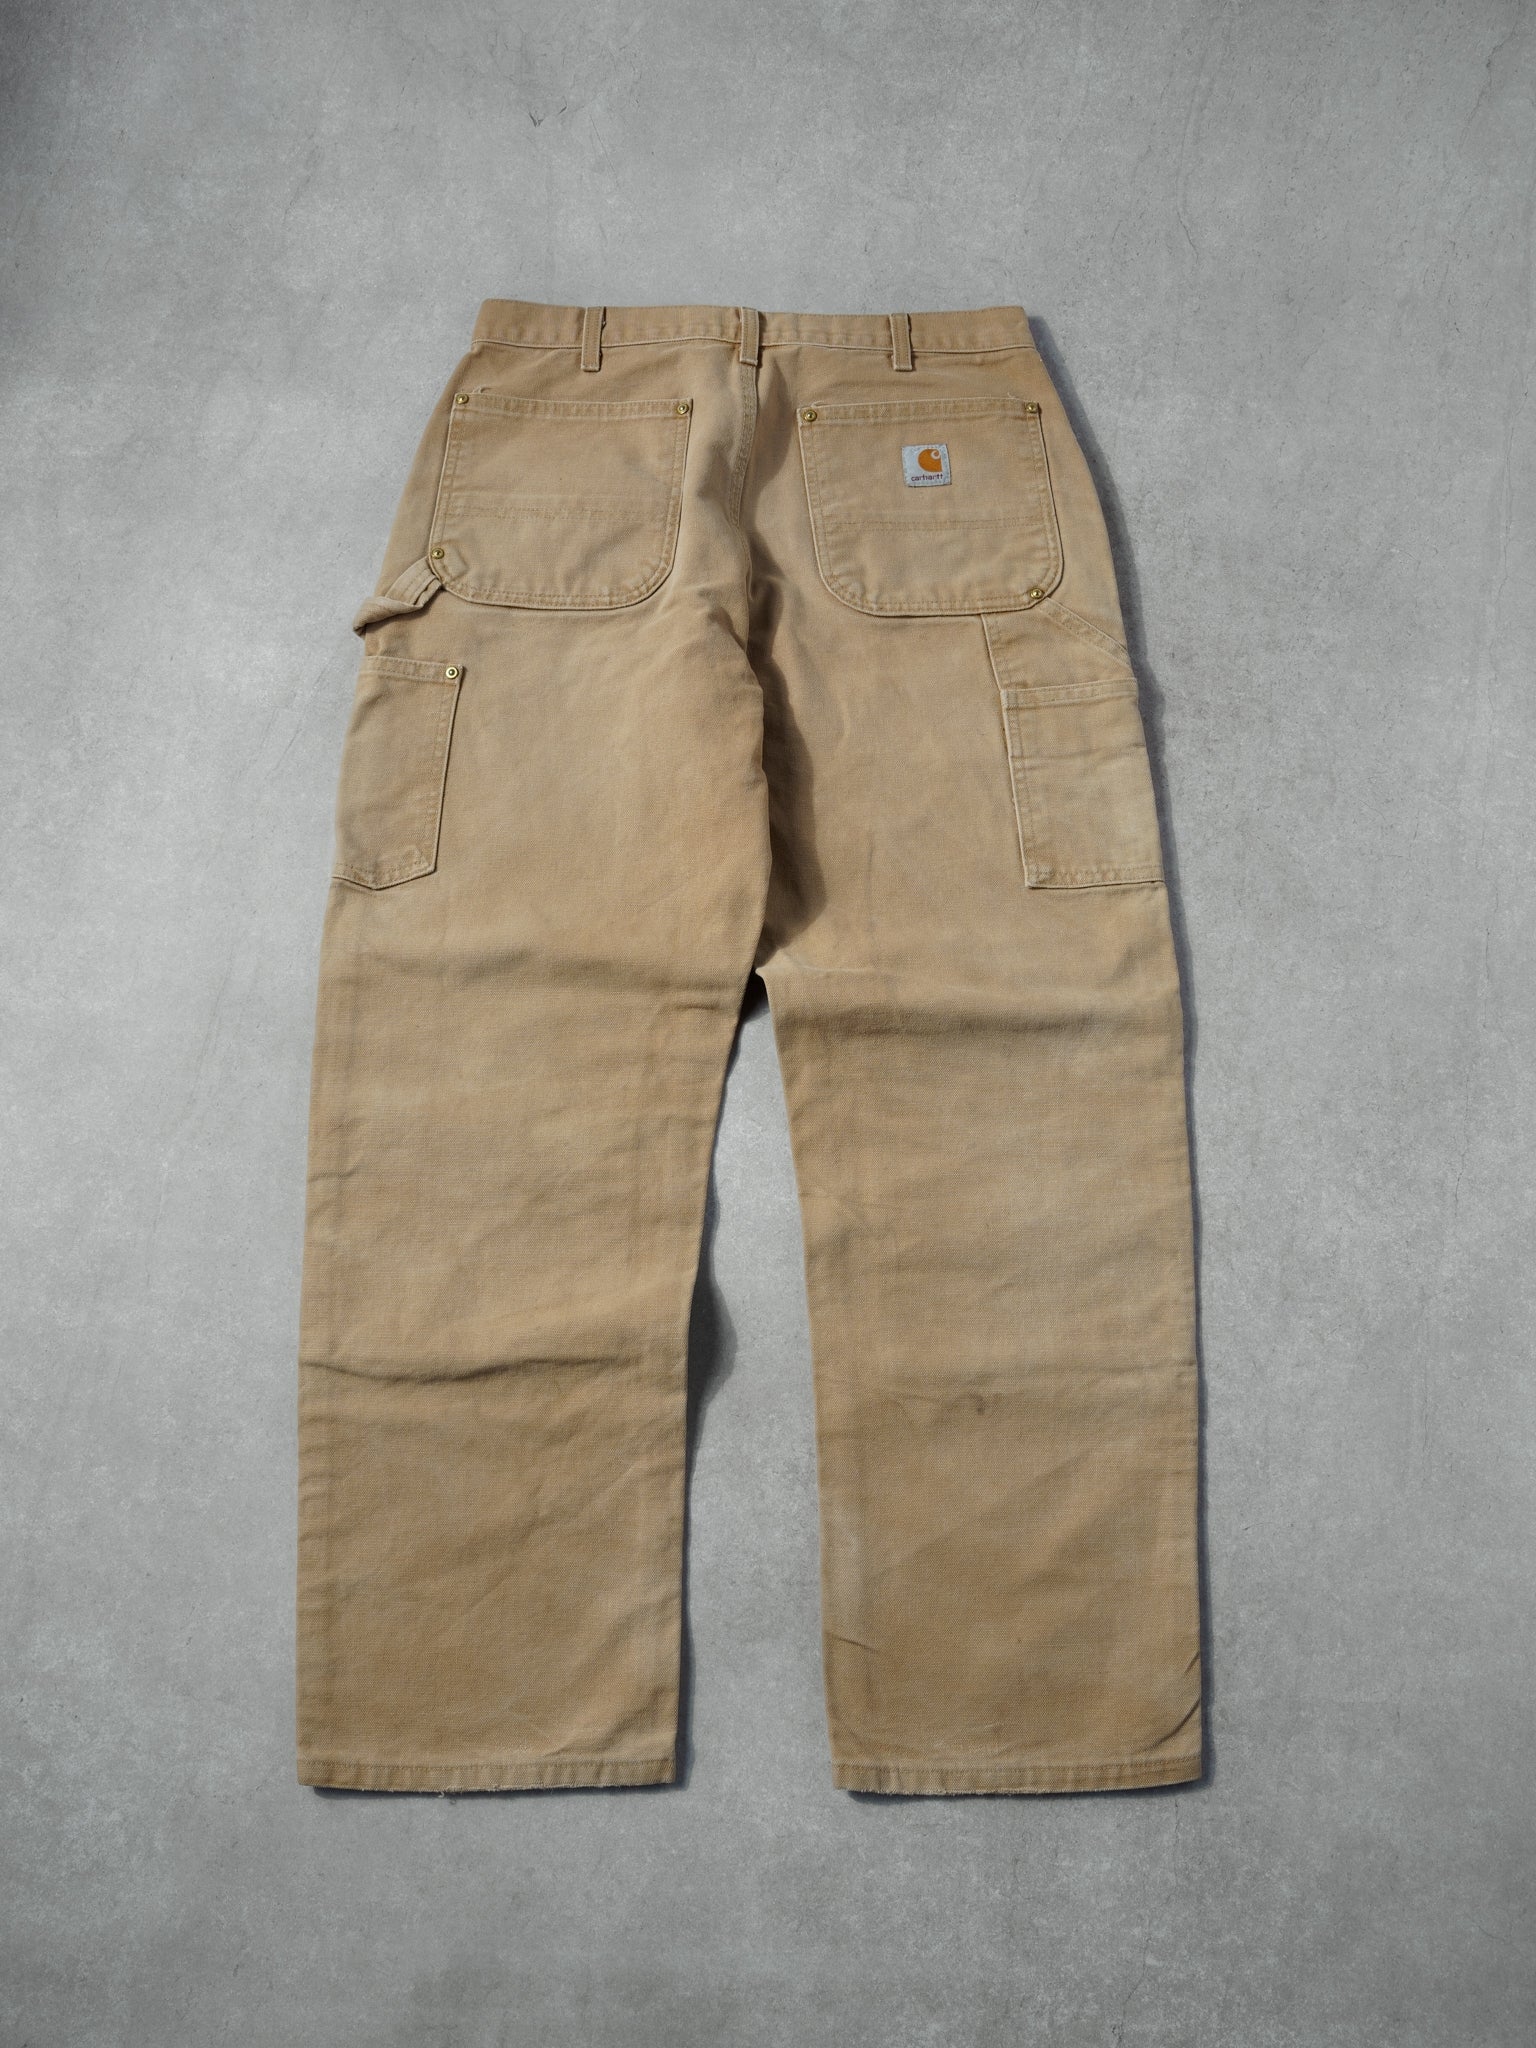 Vintage 90s Khaki Carhartt Dungeree Double Knee Carpenter Pants (32x29)